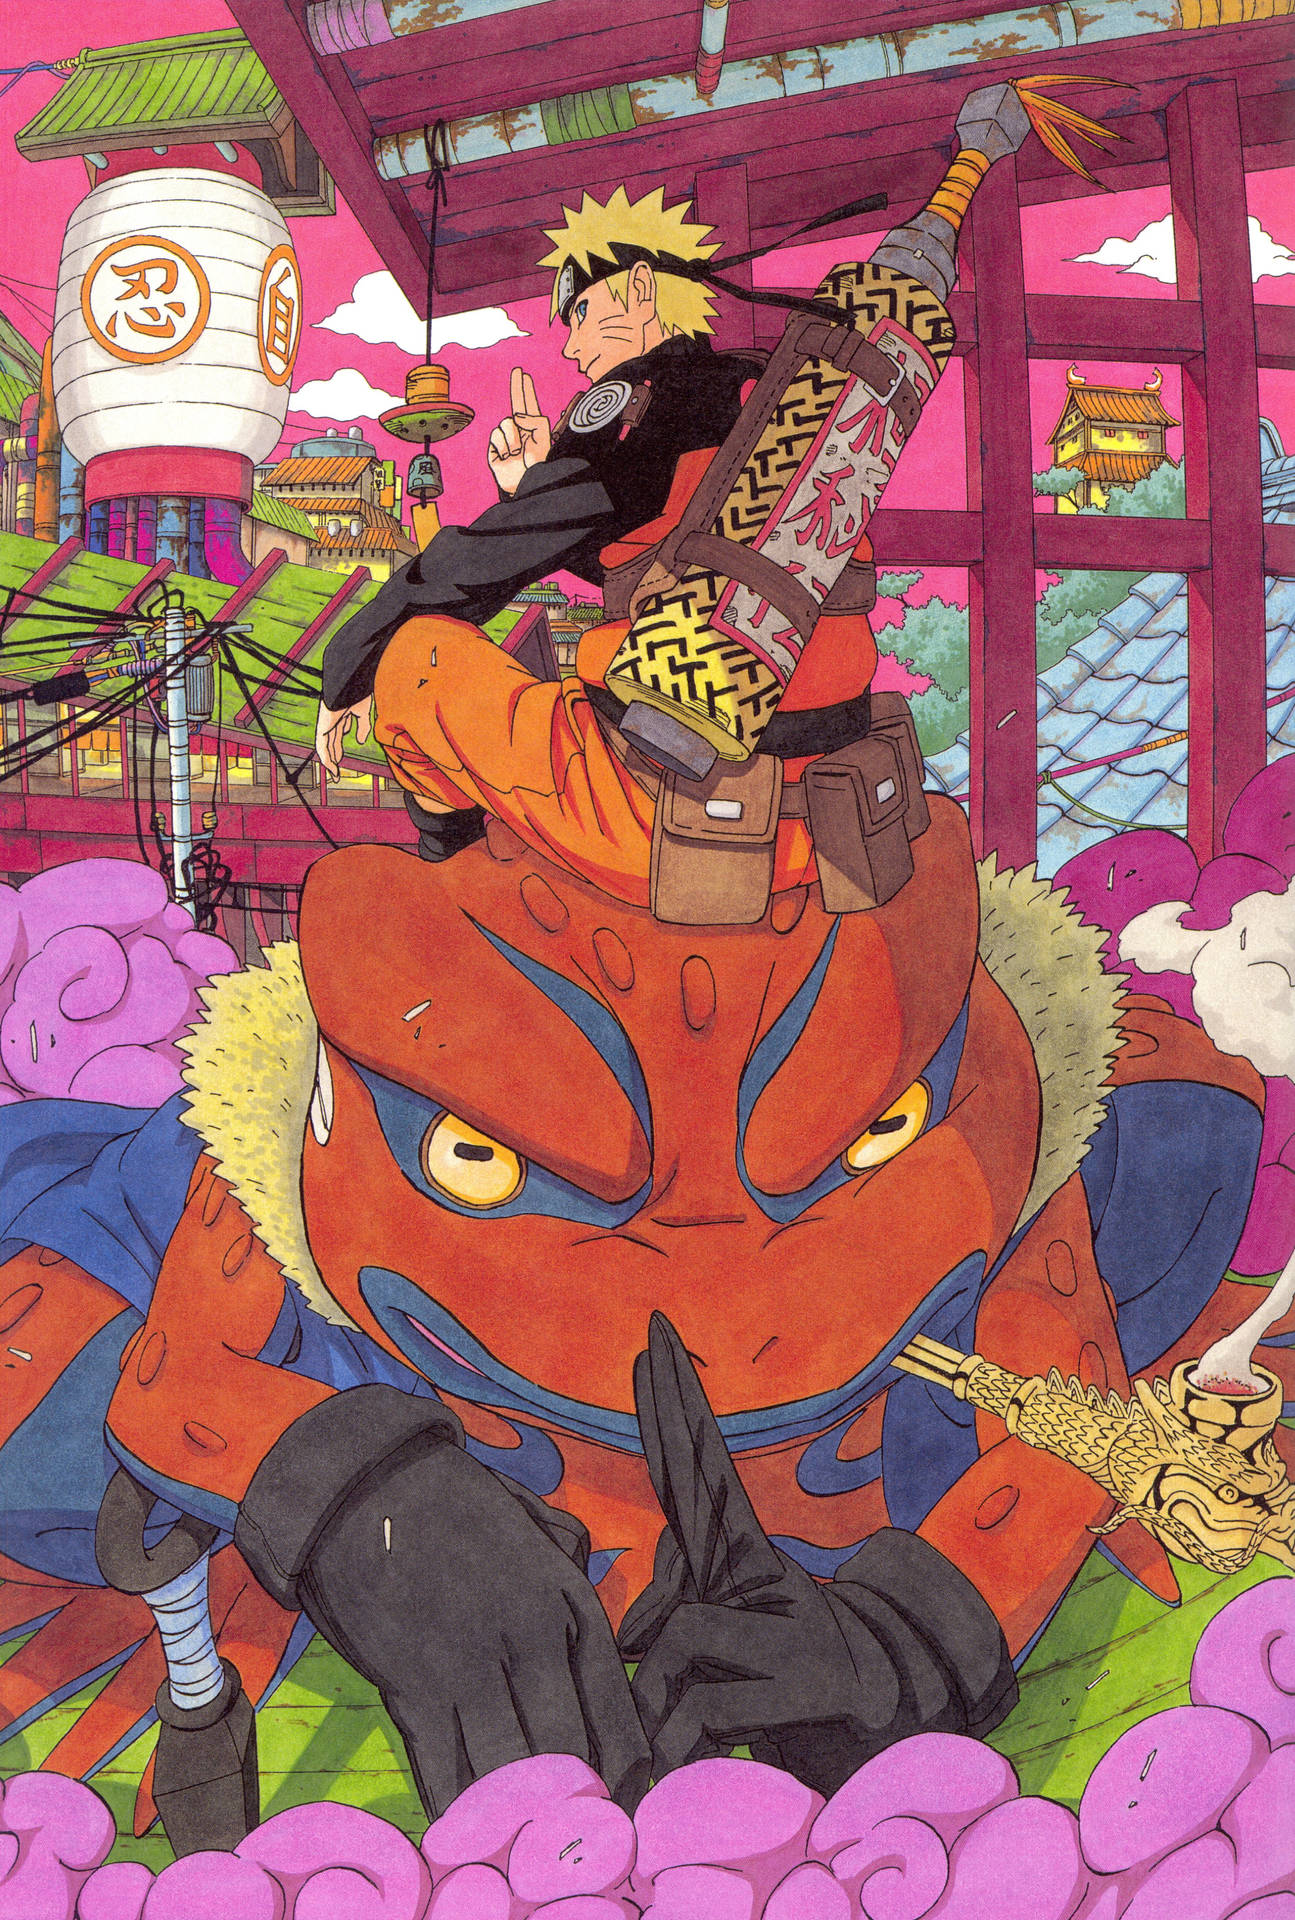 Moving Naruto Toad Gamamaru